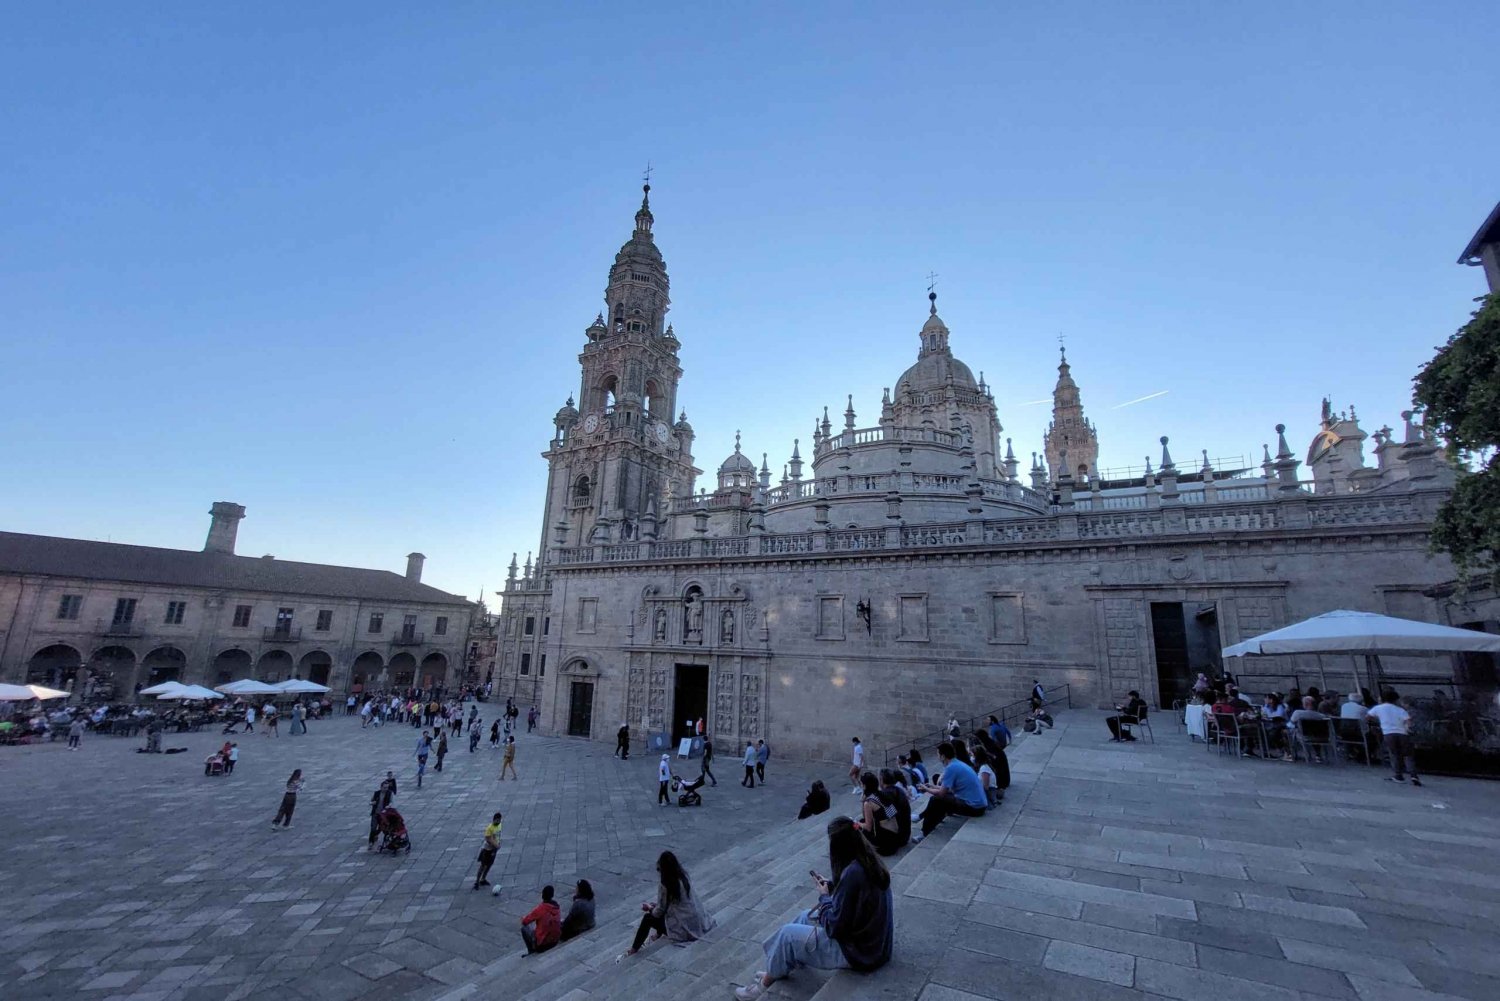 Private Tour Secrets of Compostela